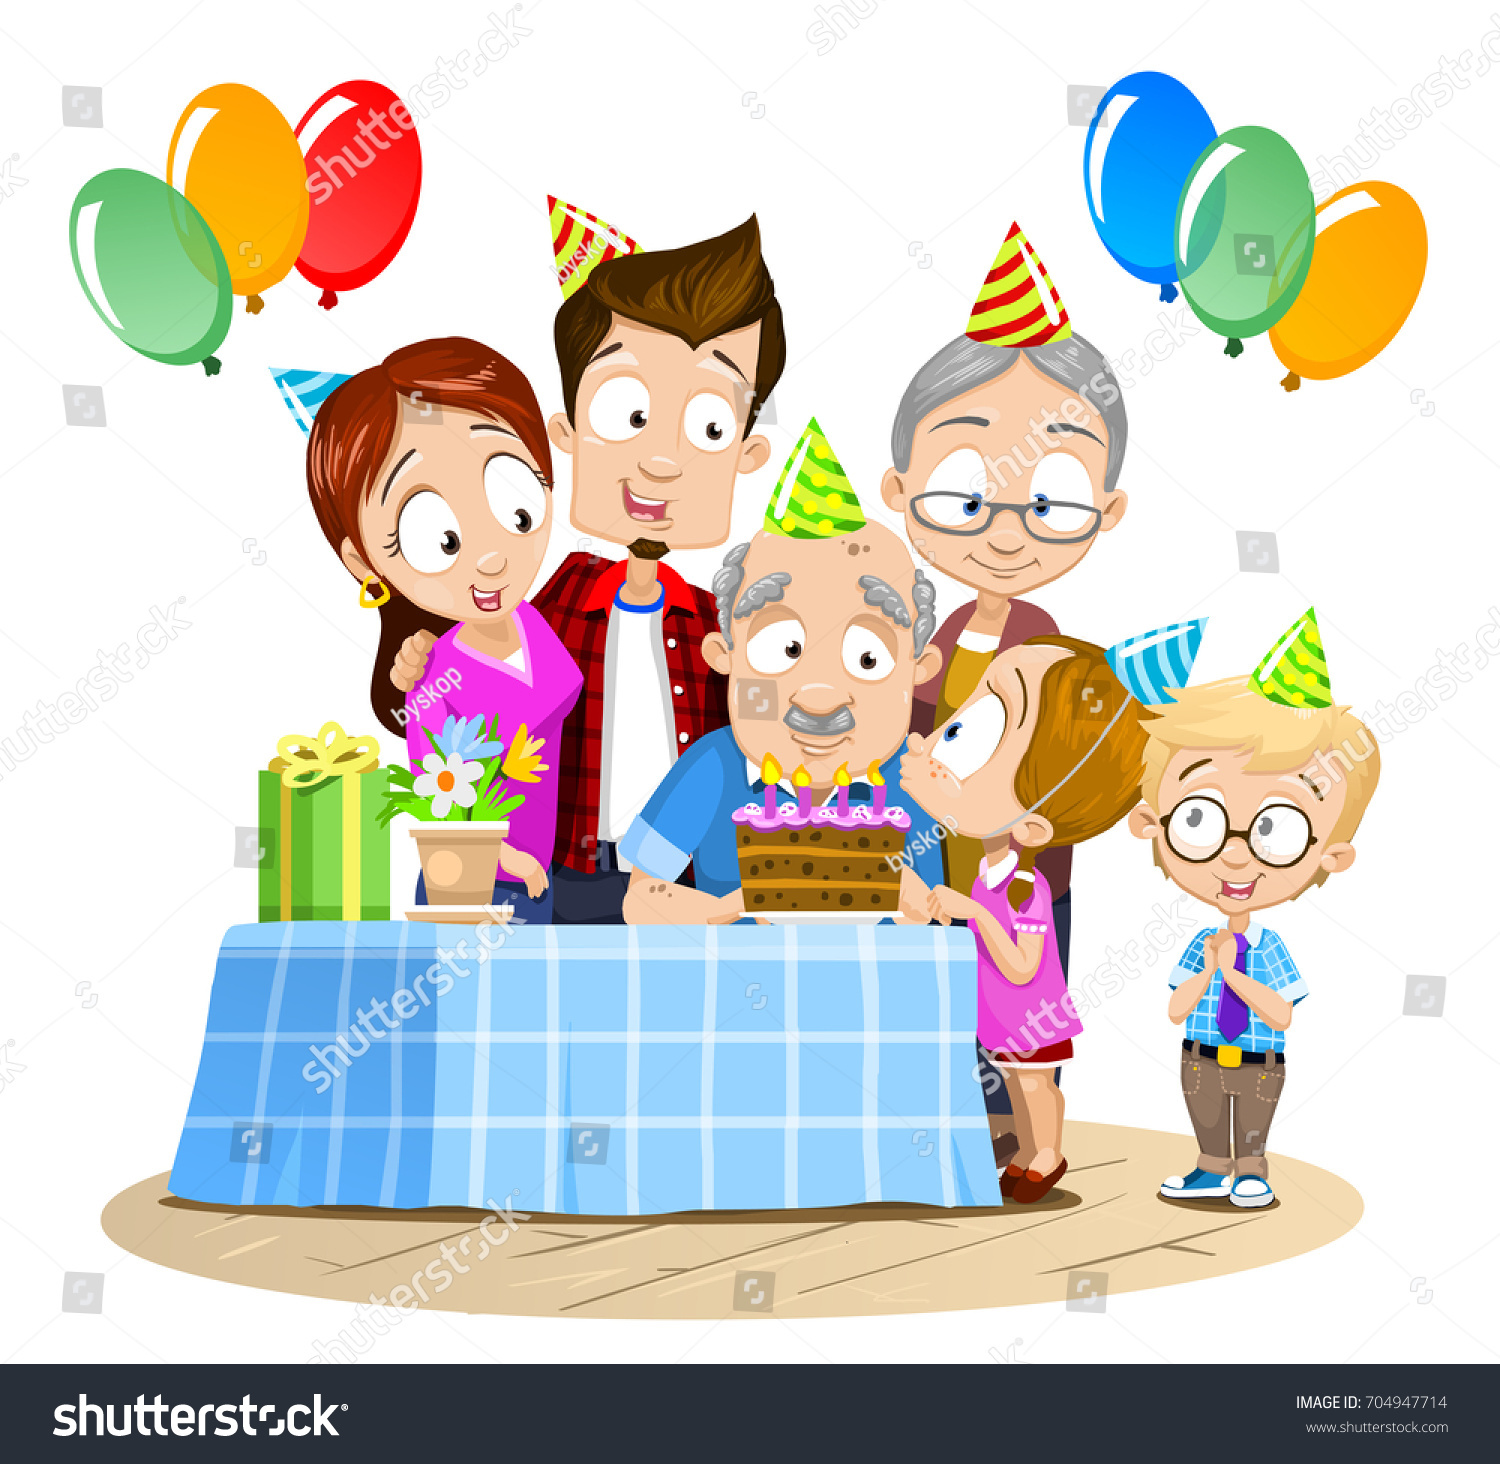 Download Vector Illustration Family Celebrating Birthday Together ...